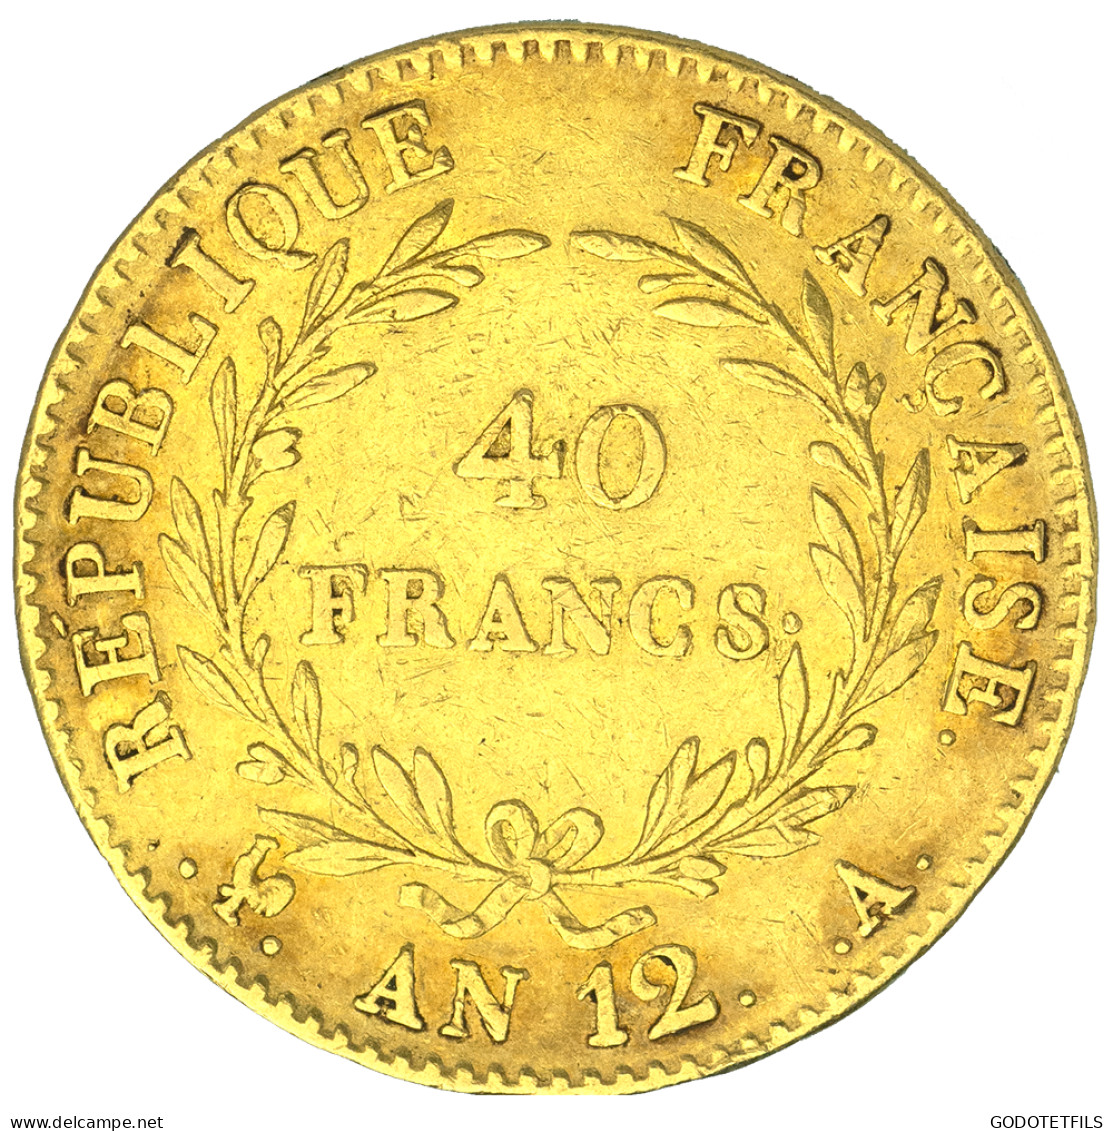 Consulat-Bonaparte Premier Consul-40 Francs An 12 (1803) Paris - 40 Francs (oro)